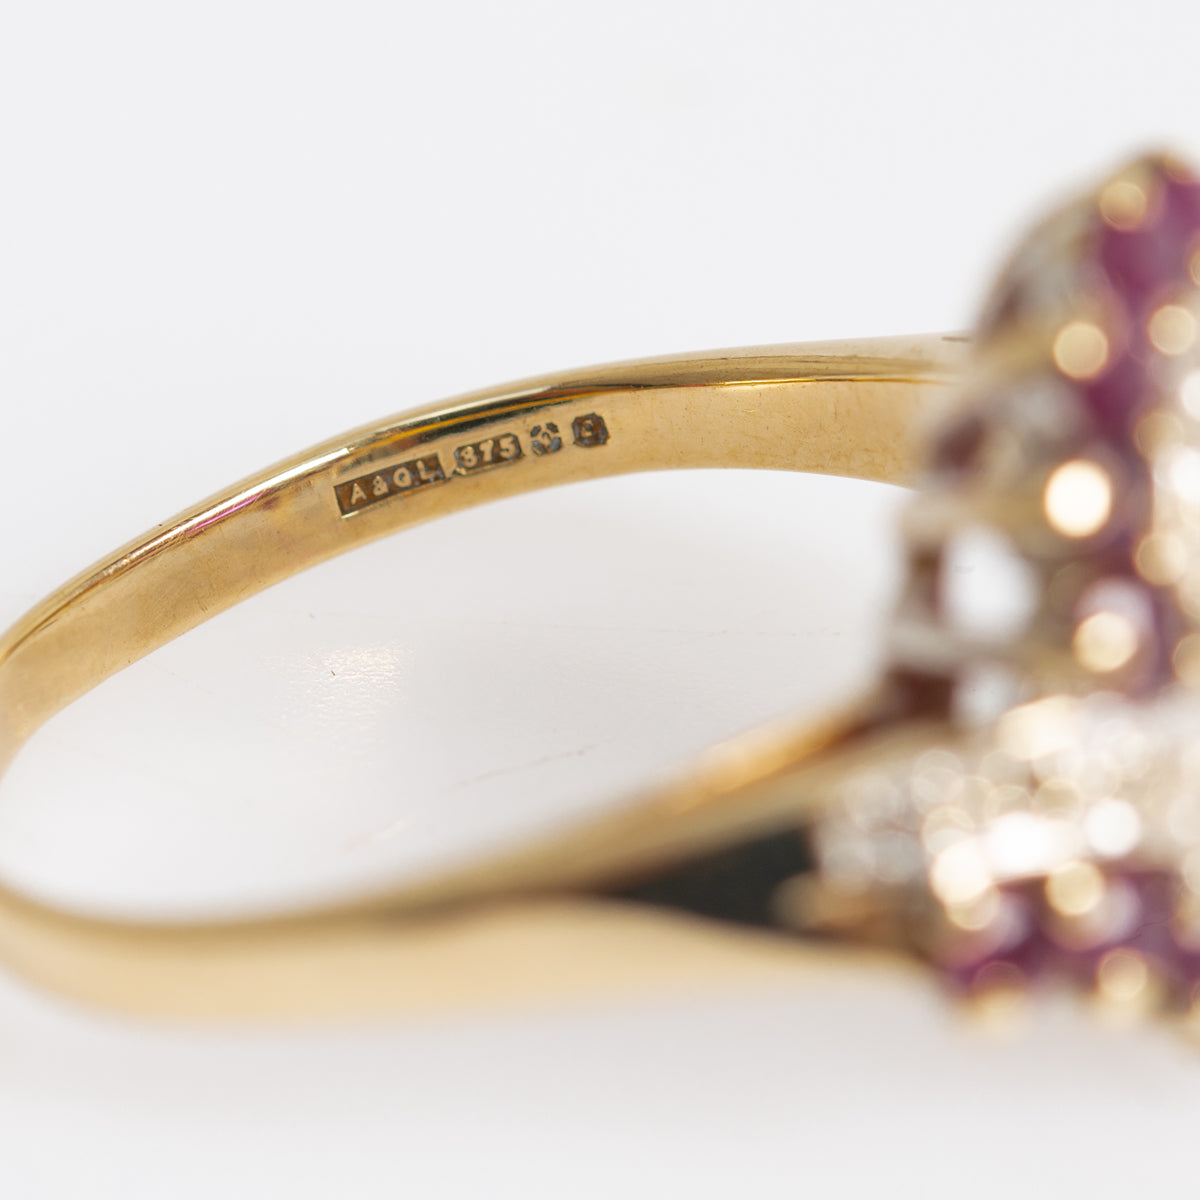 Vintage 9ct Gold Ruby & Diamond Cocktail Ring Art Deco Design Ladies Size P (A1232)